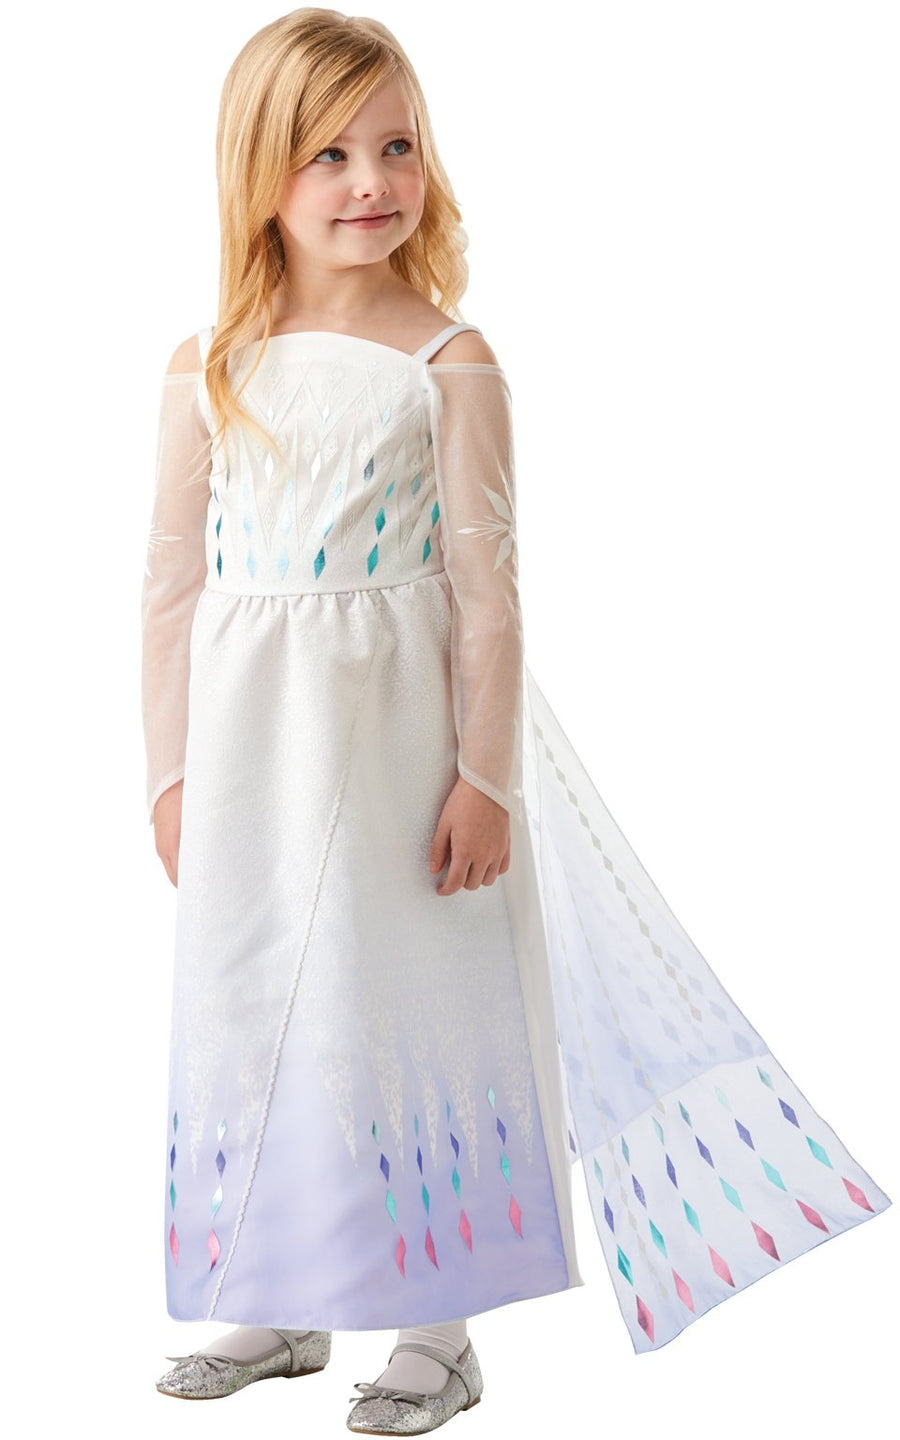 Frozen 2 Frozen Elsa Epilogue Dress Costume_1